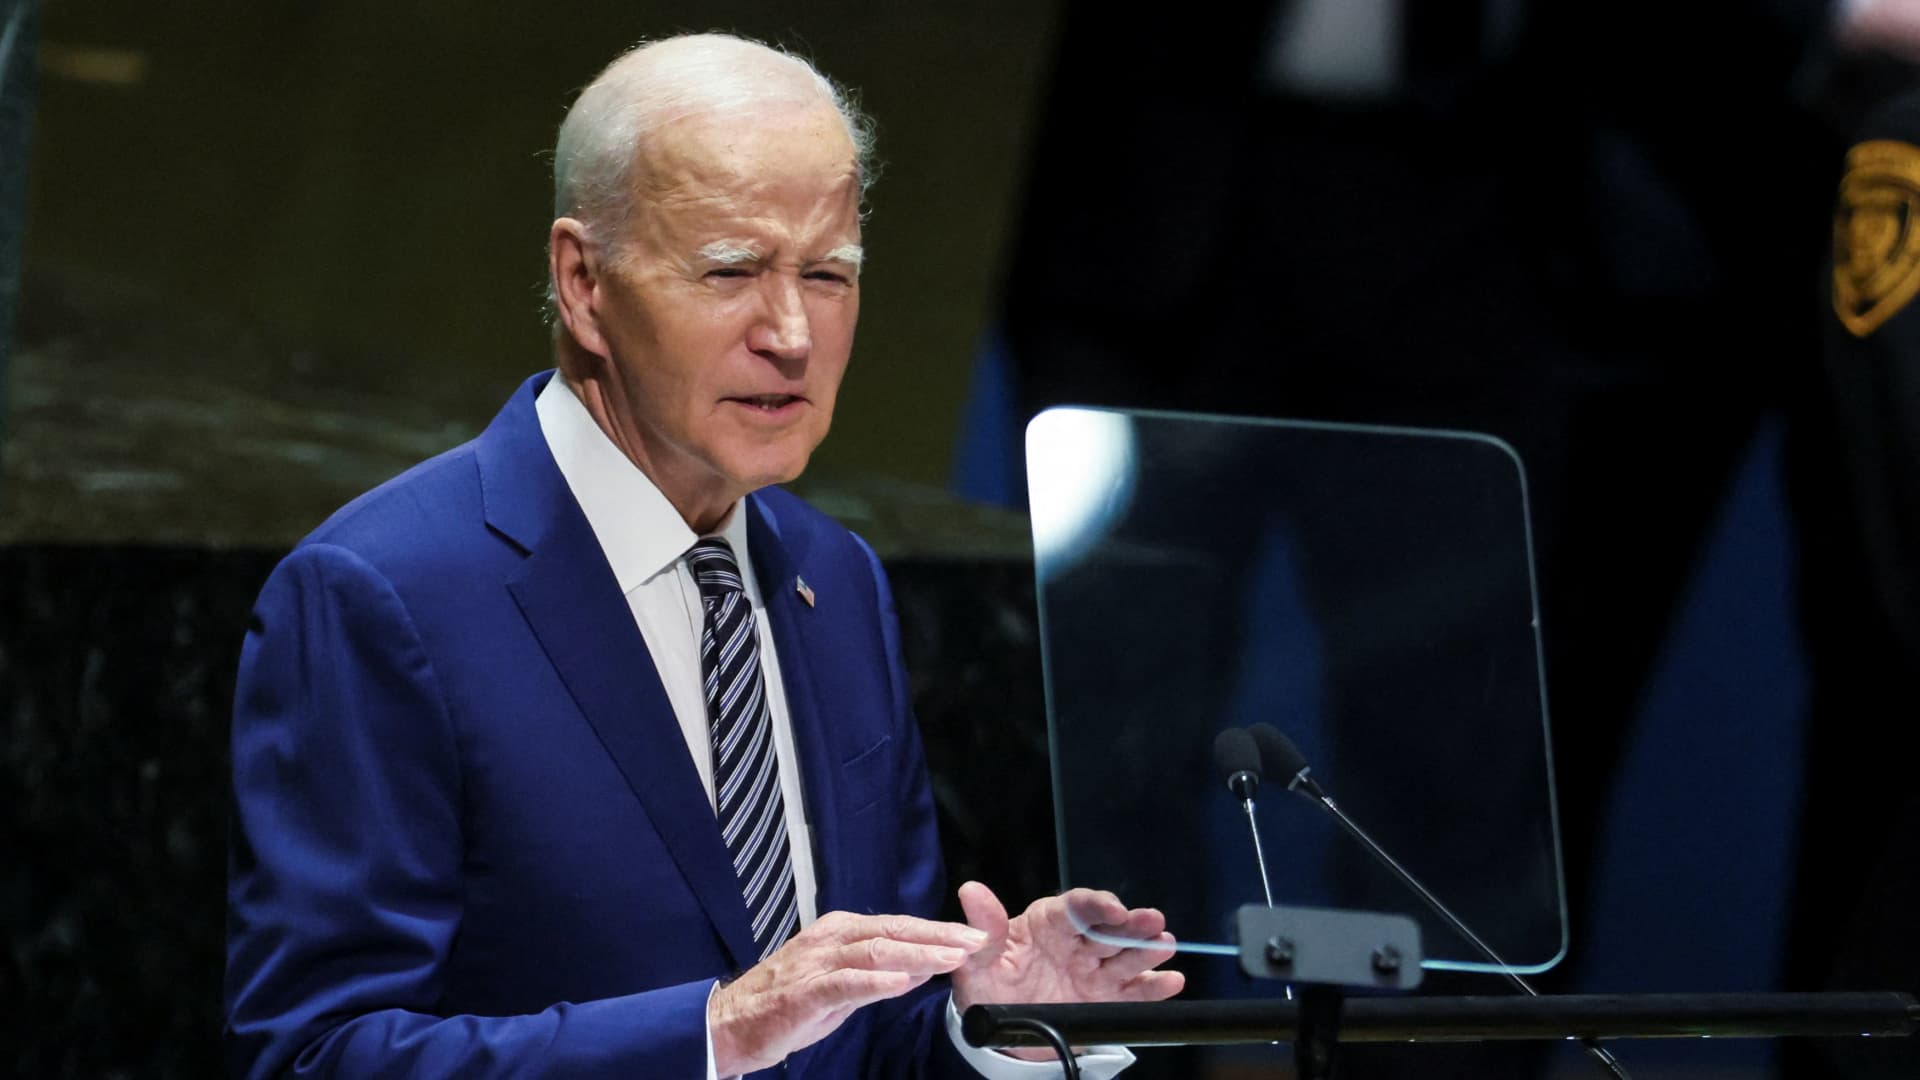 Watch dwell: President Joe Biden speaks at the UN General Assembly